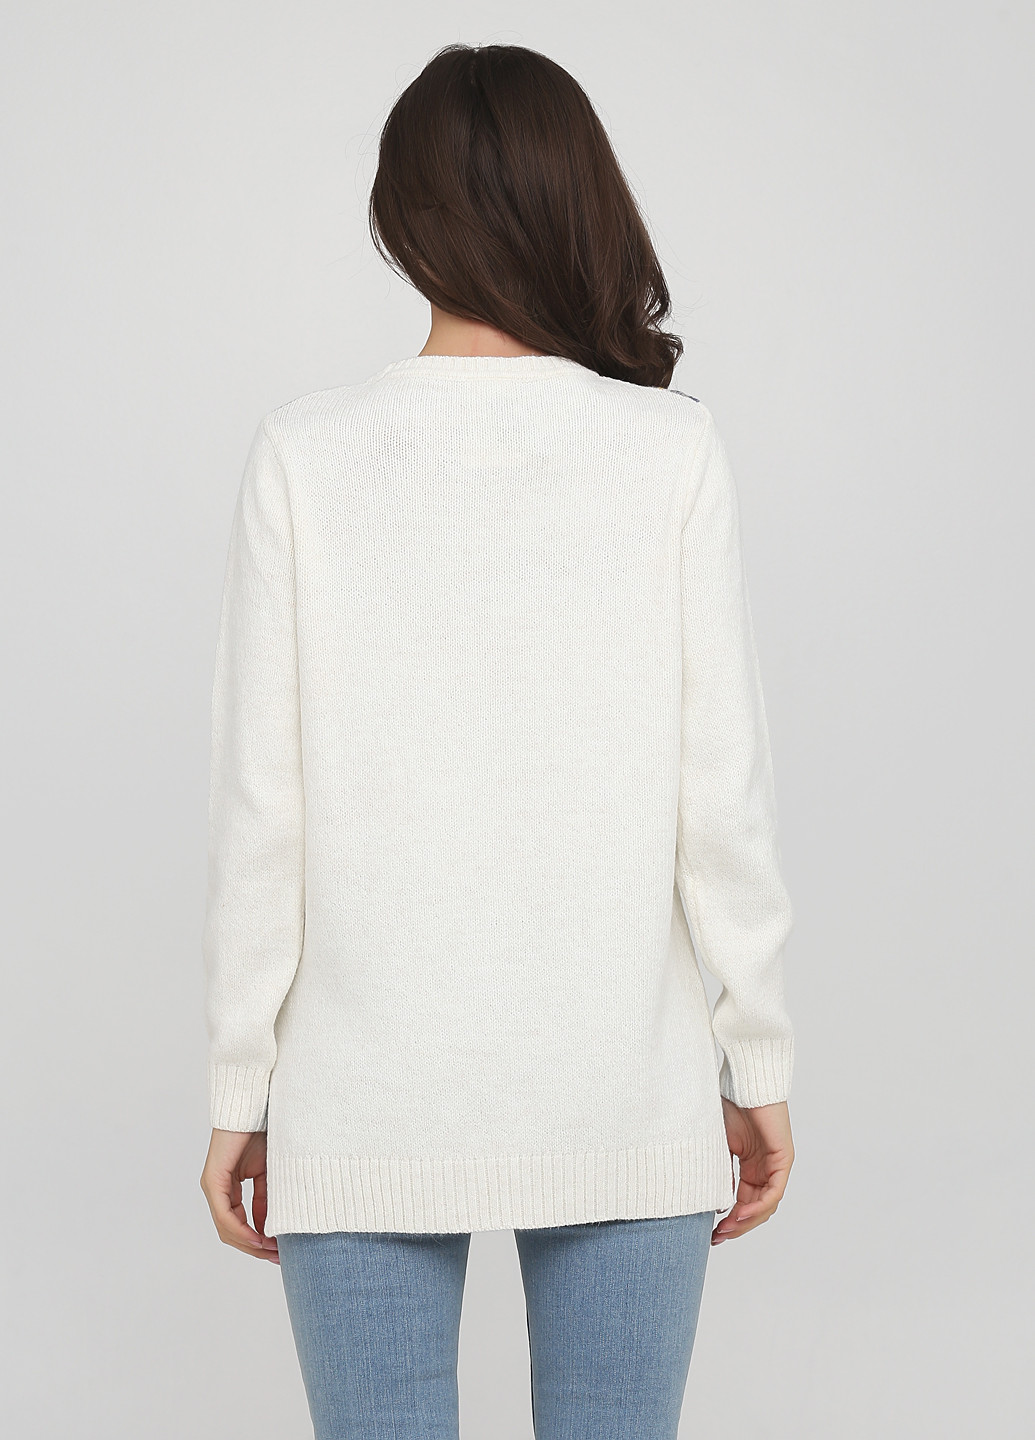 Молочный демисезонный пуловер пуловер U.S. Polo Assn.